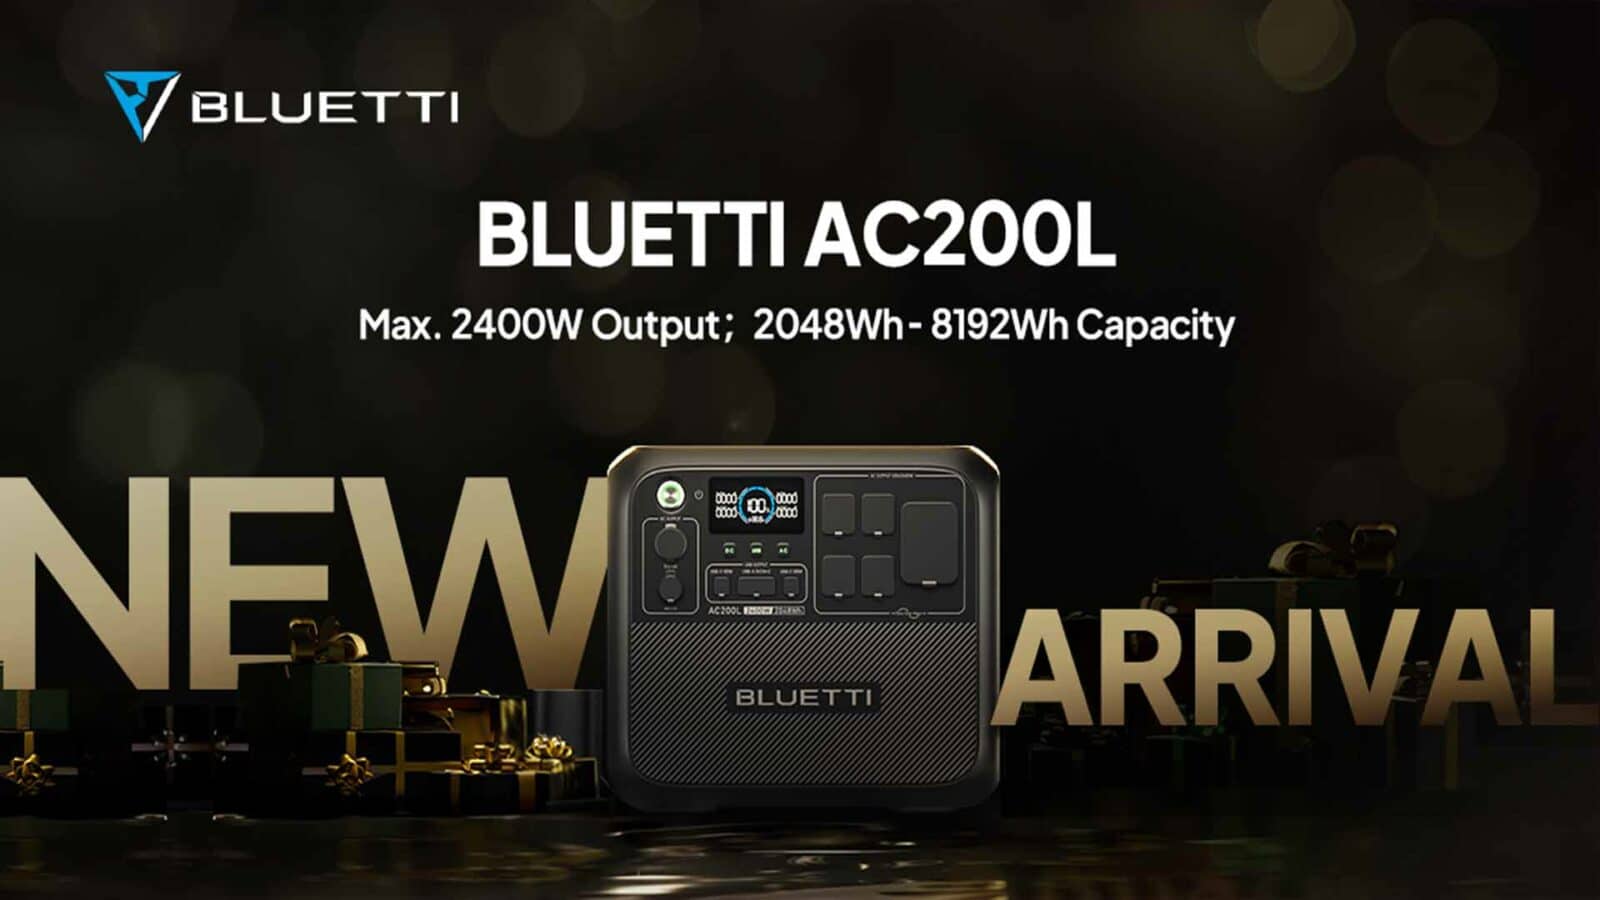 Model baru bluetti ac200l dengan output maksimum 2400w dan kapasitas 8192wh telah tiba.